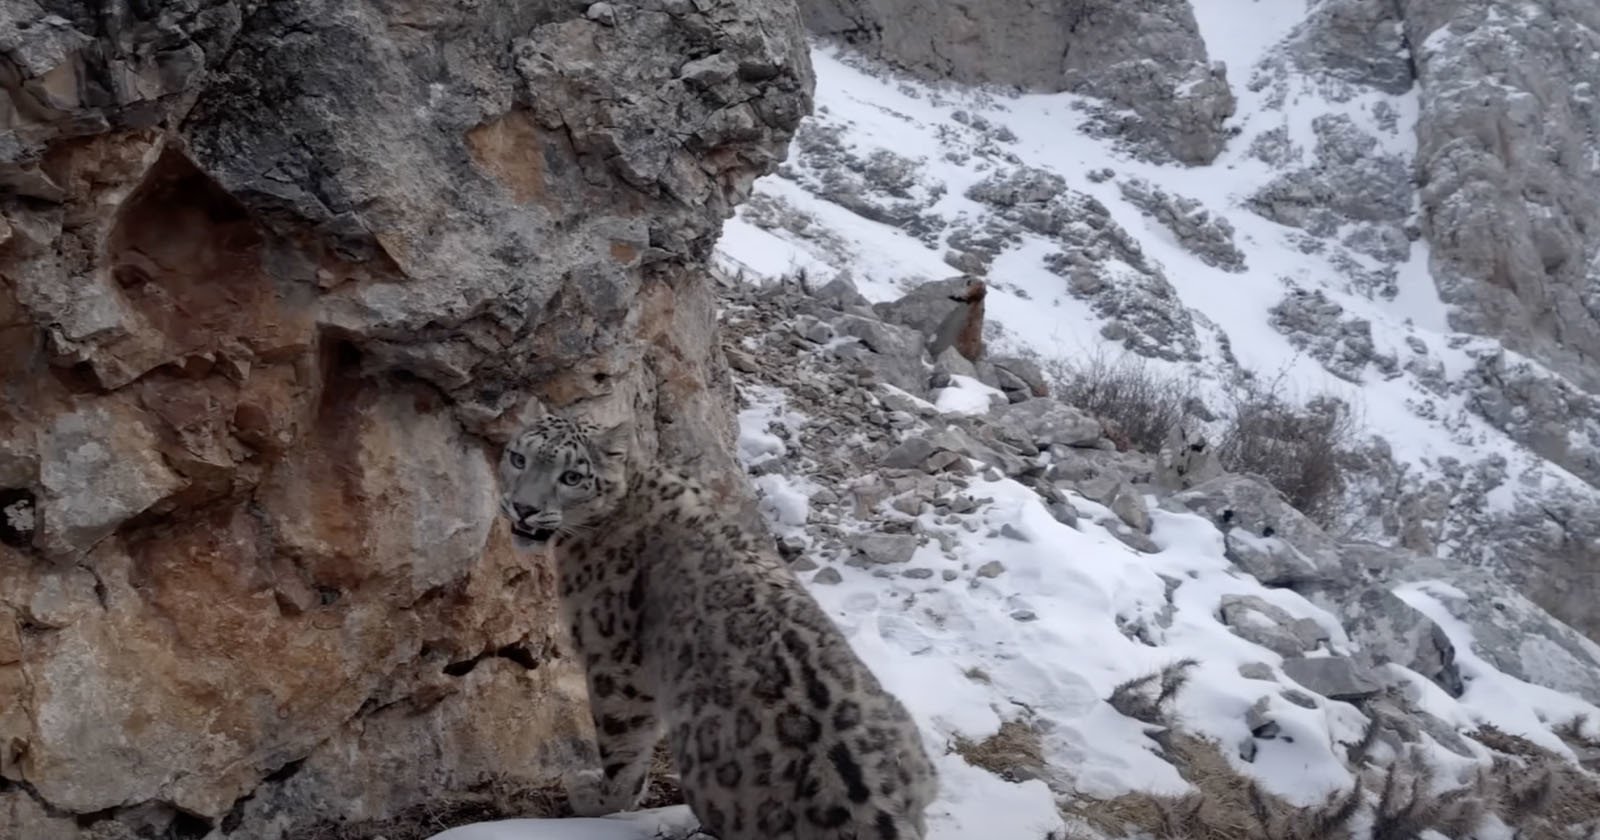 BBCs Struggle to Film a Snow Leopard Among Cat-Colored Rocks